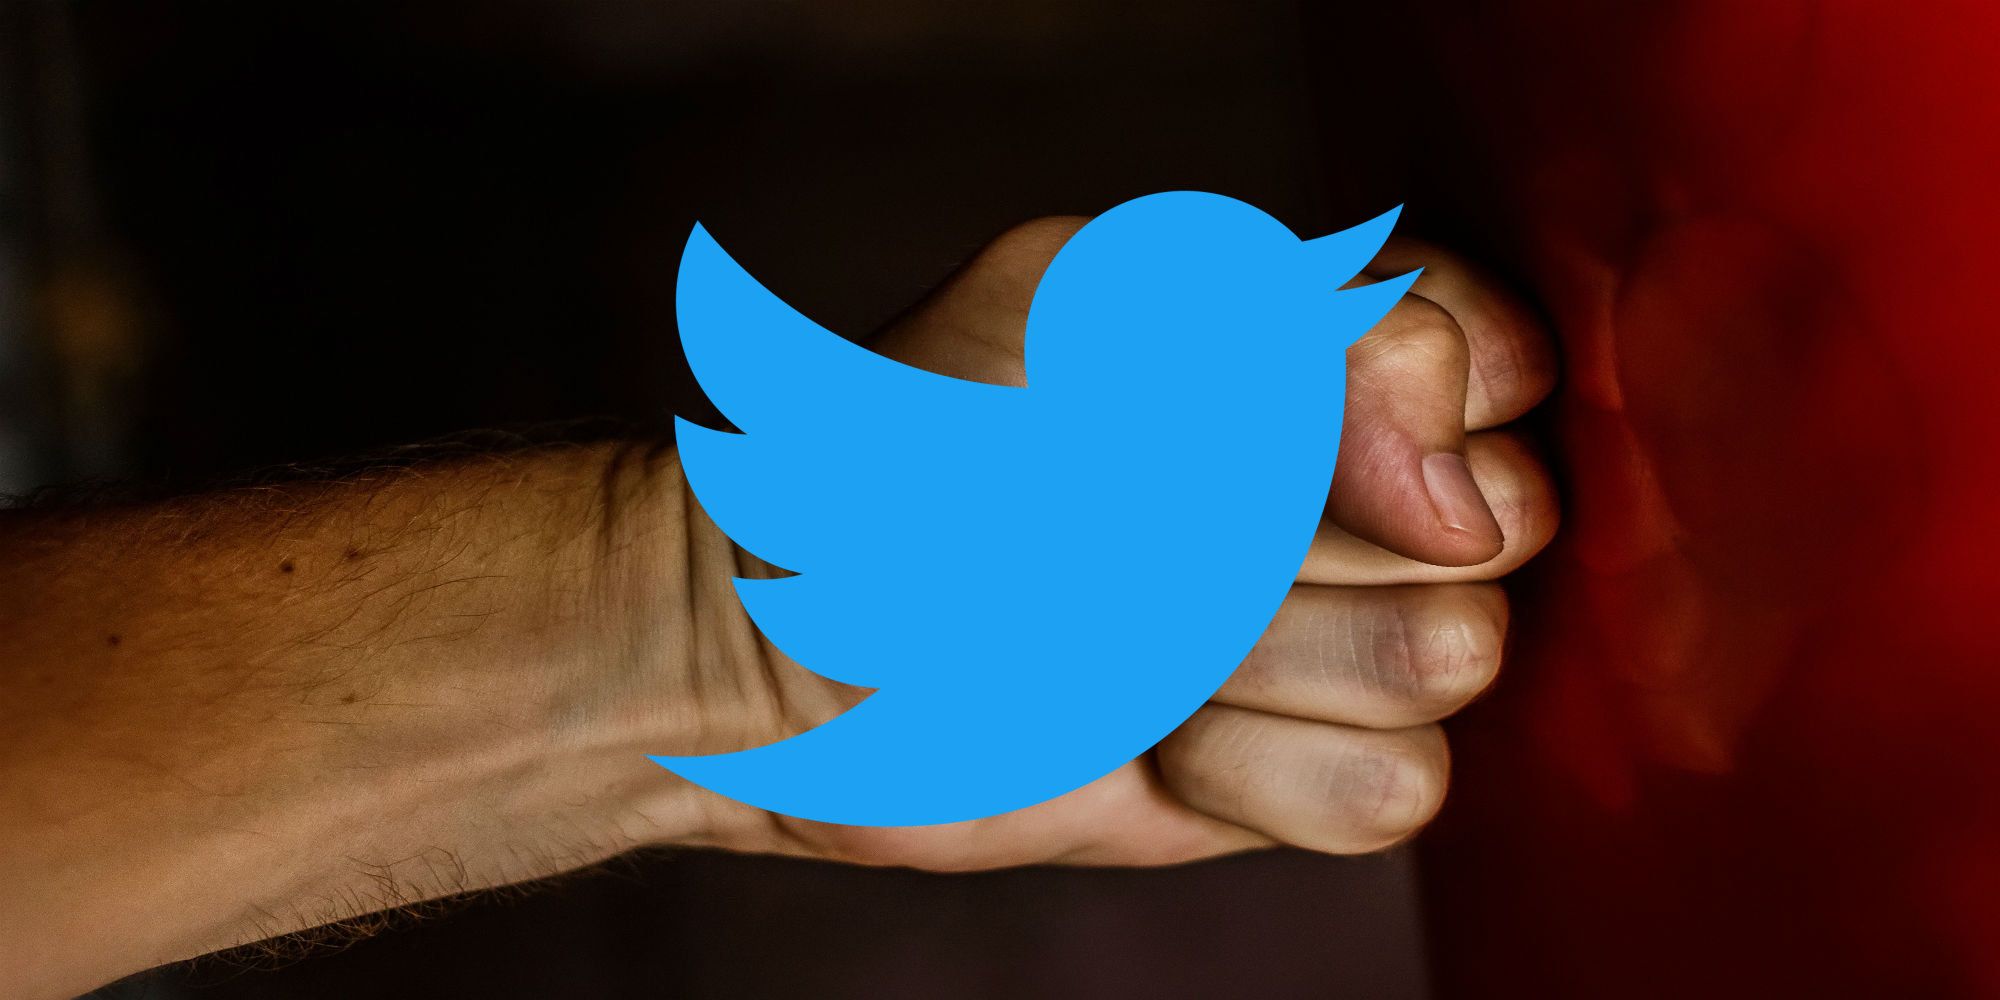 FBI Twitter Account Accused Of Sharing Anti-Semitic Content